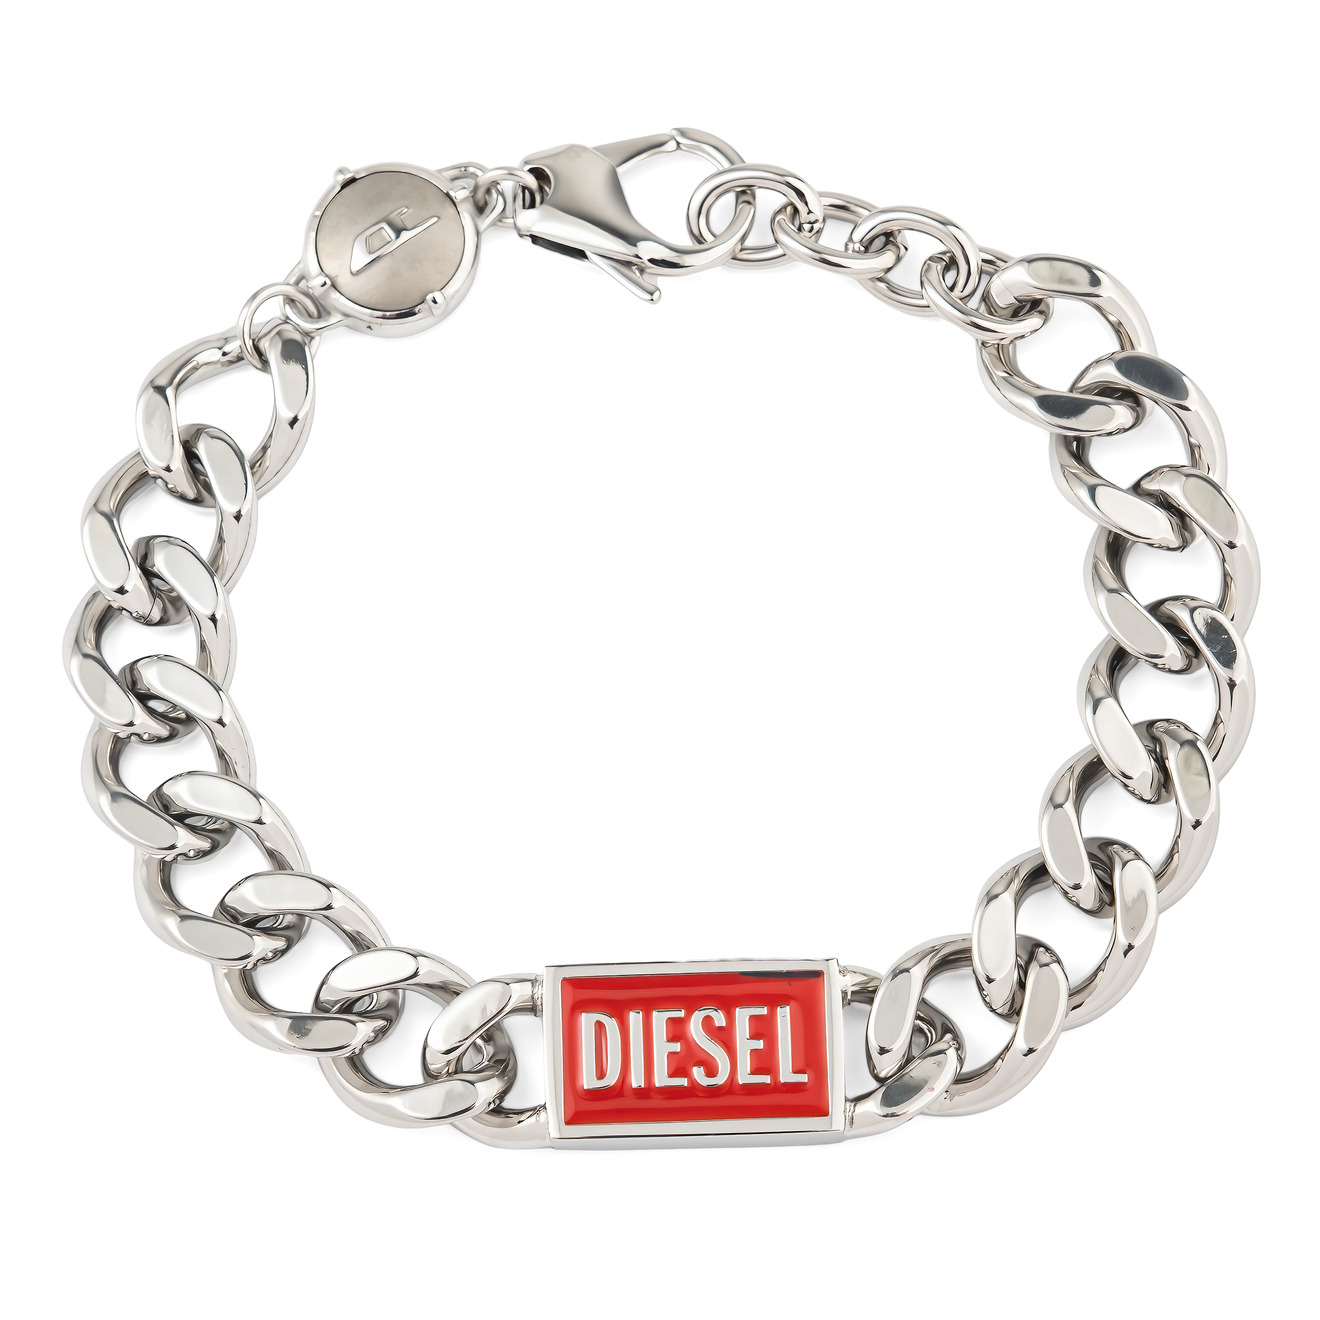 Diesel Браслет-цепь Diesel цена и фото